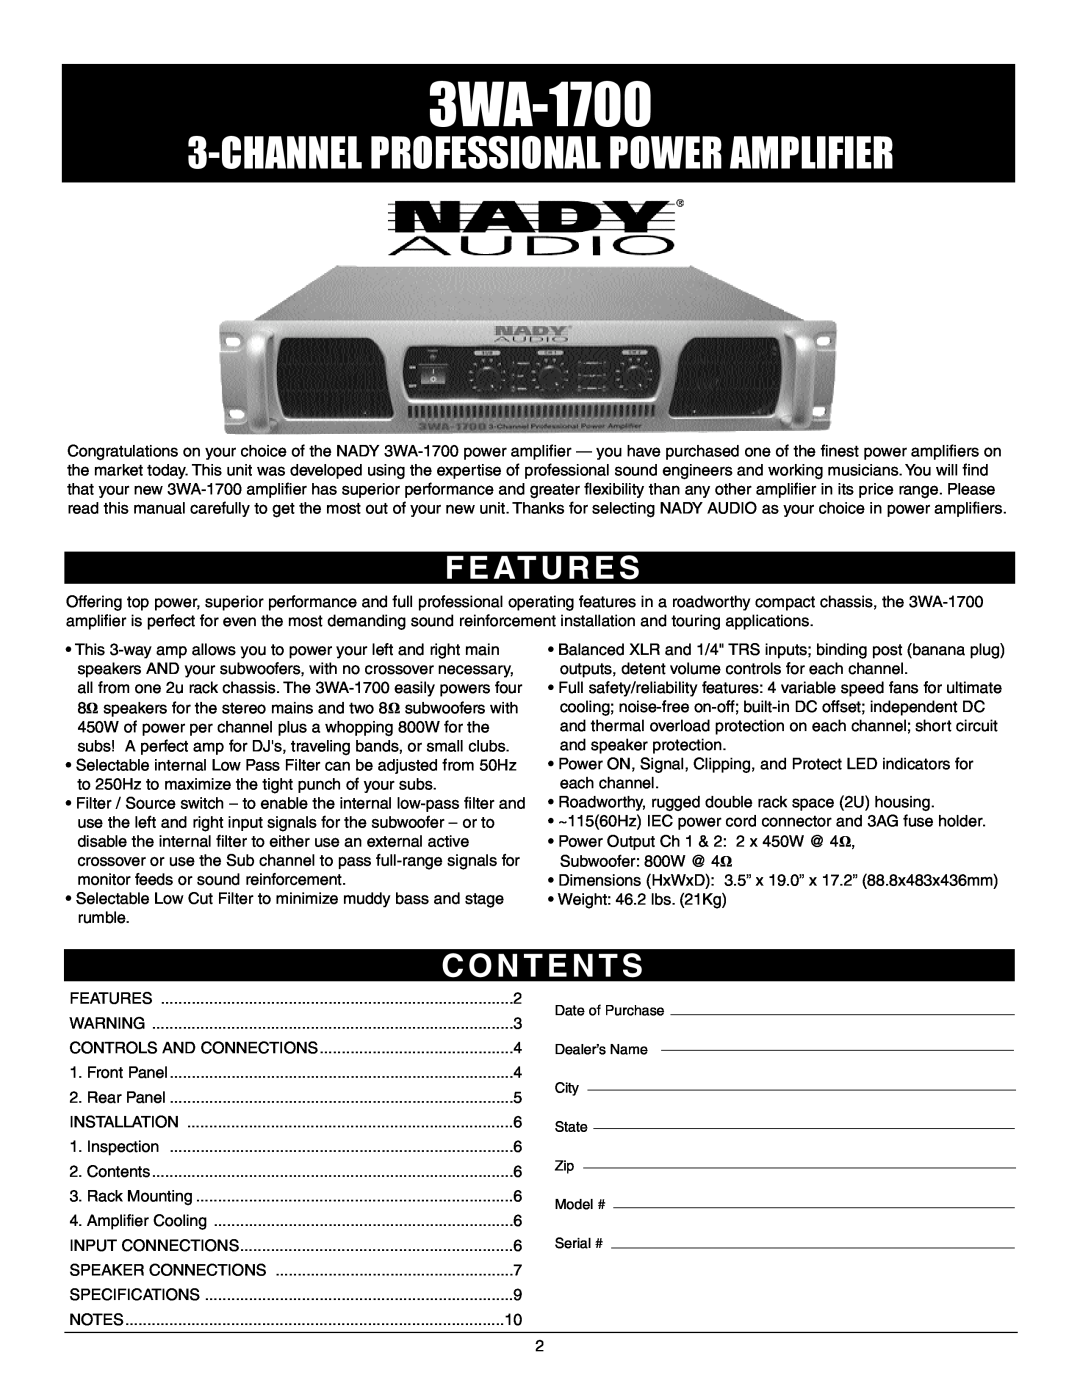 Nady Systems 3WA-1700 owner manual F E At U R E S, C O N T E N T S, Channelprofessional Power Amplifier 